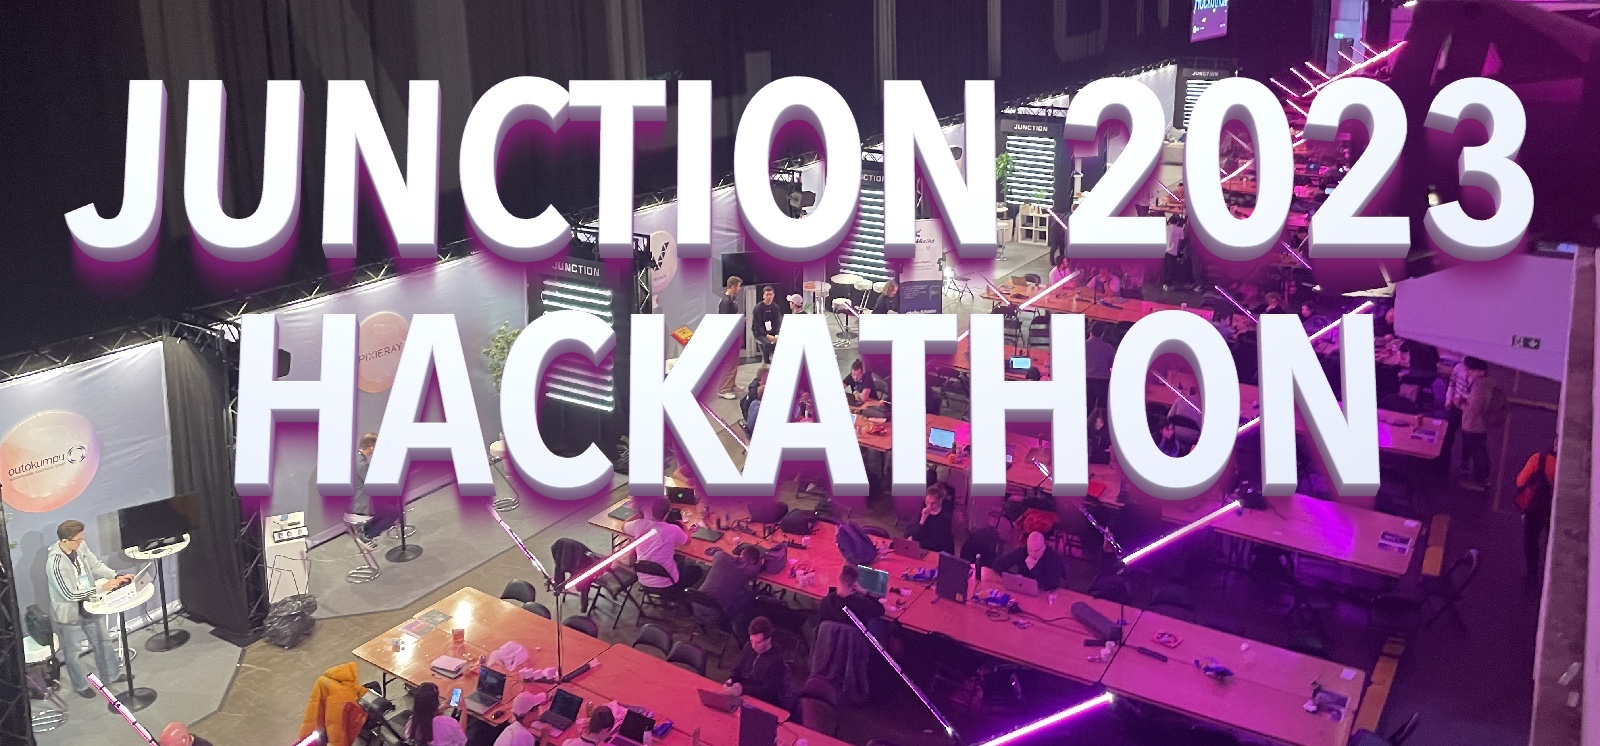 Helsinki Hackathon Horizons: Junction X 2023